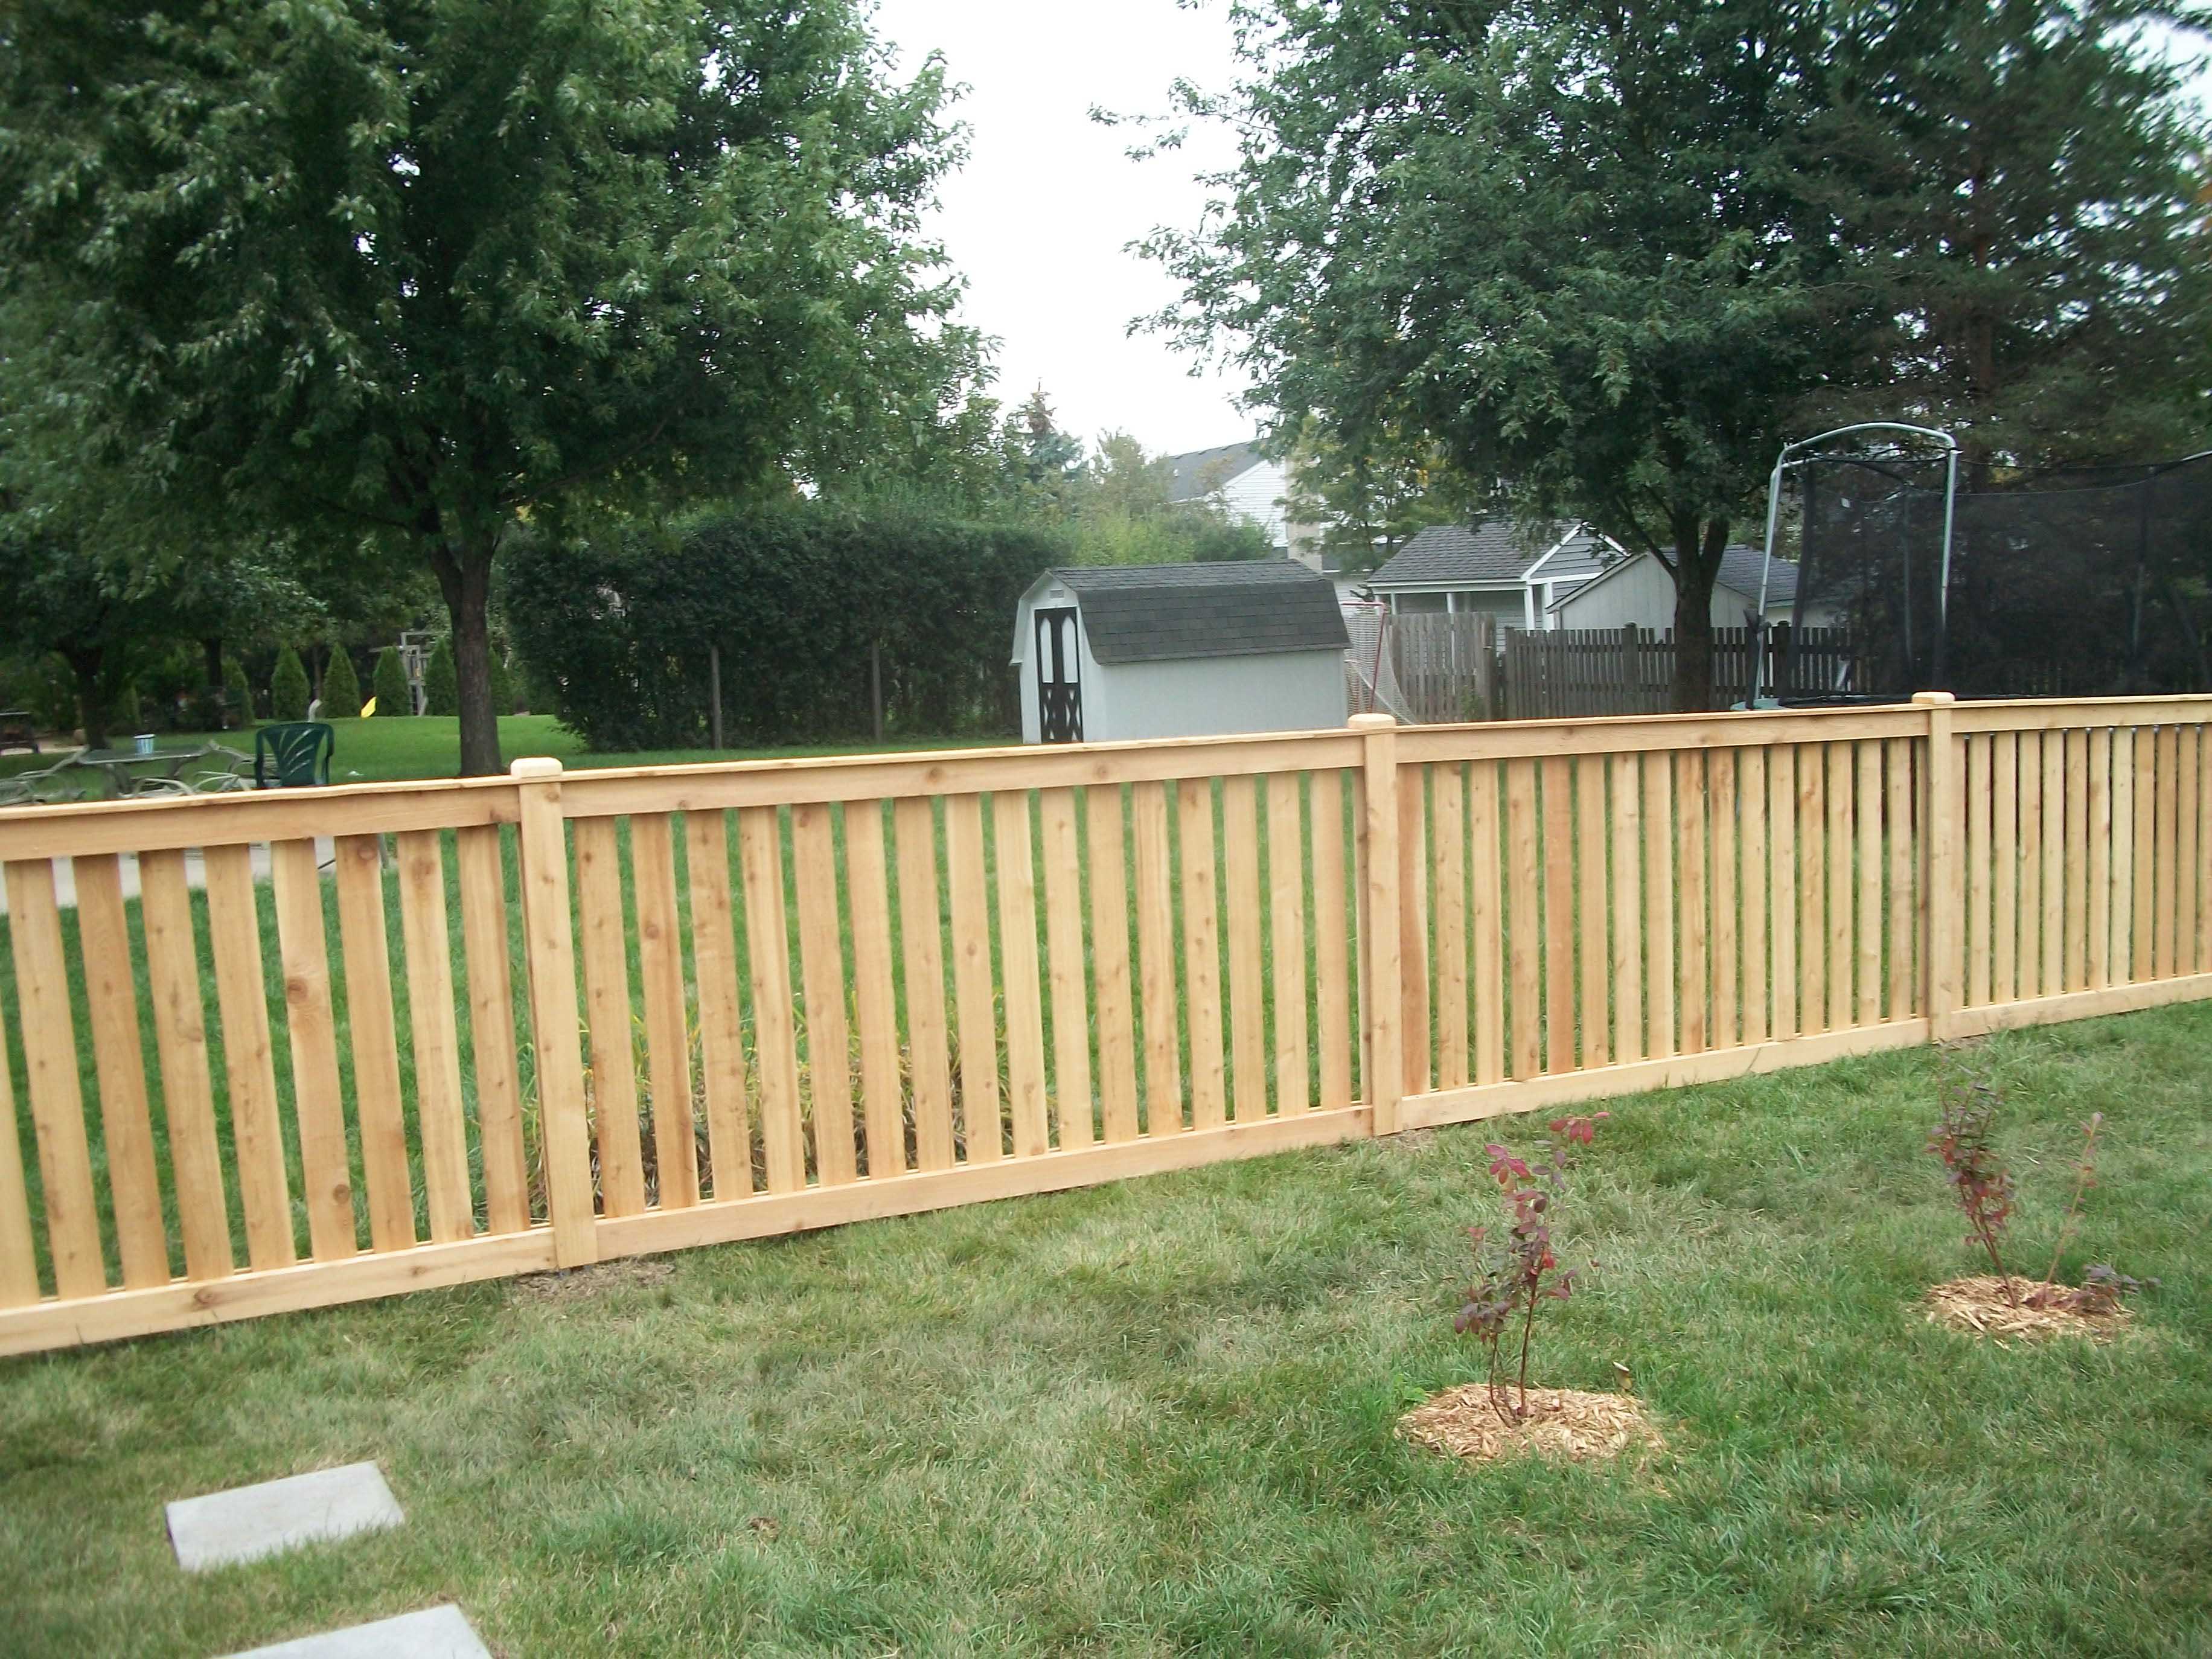 Custom Wood Fences